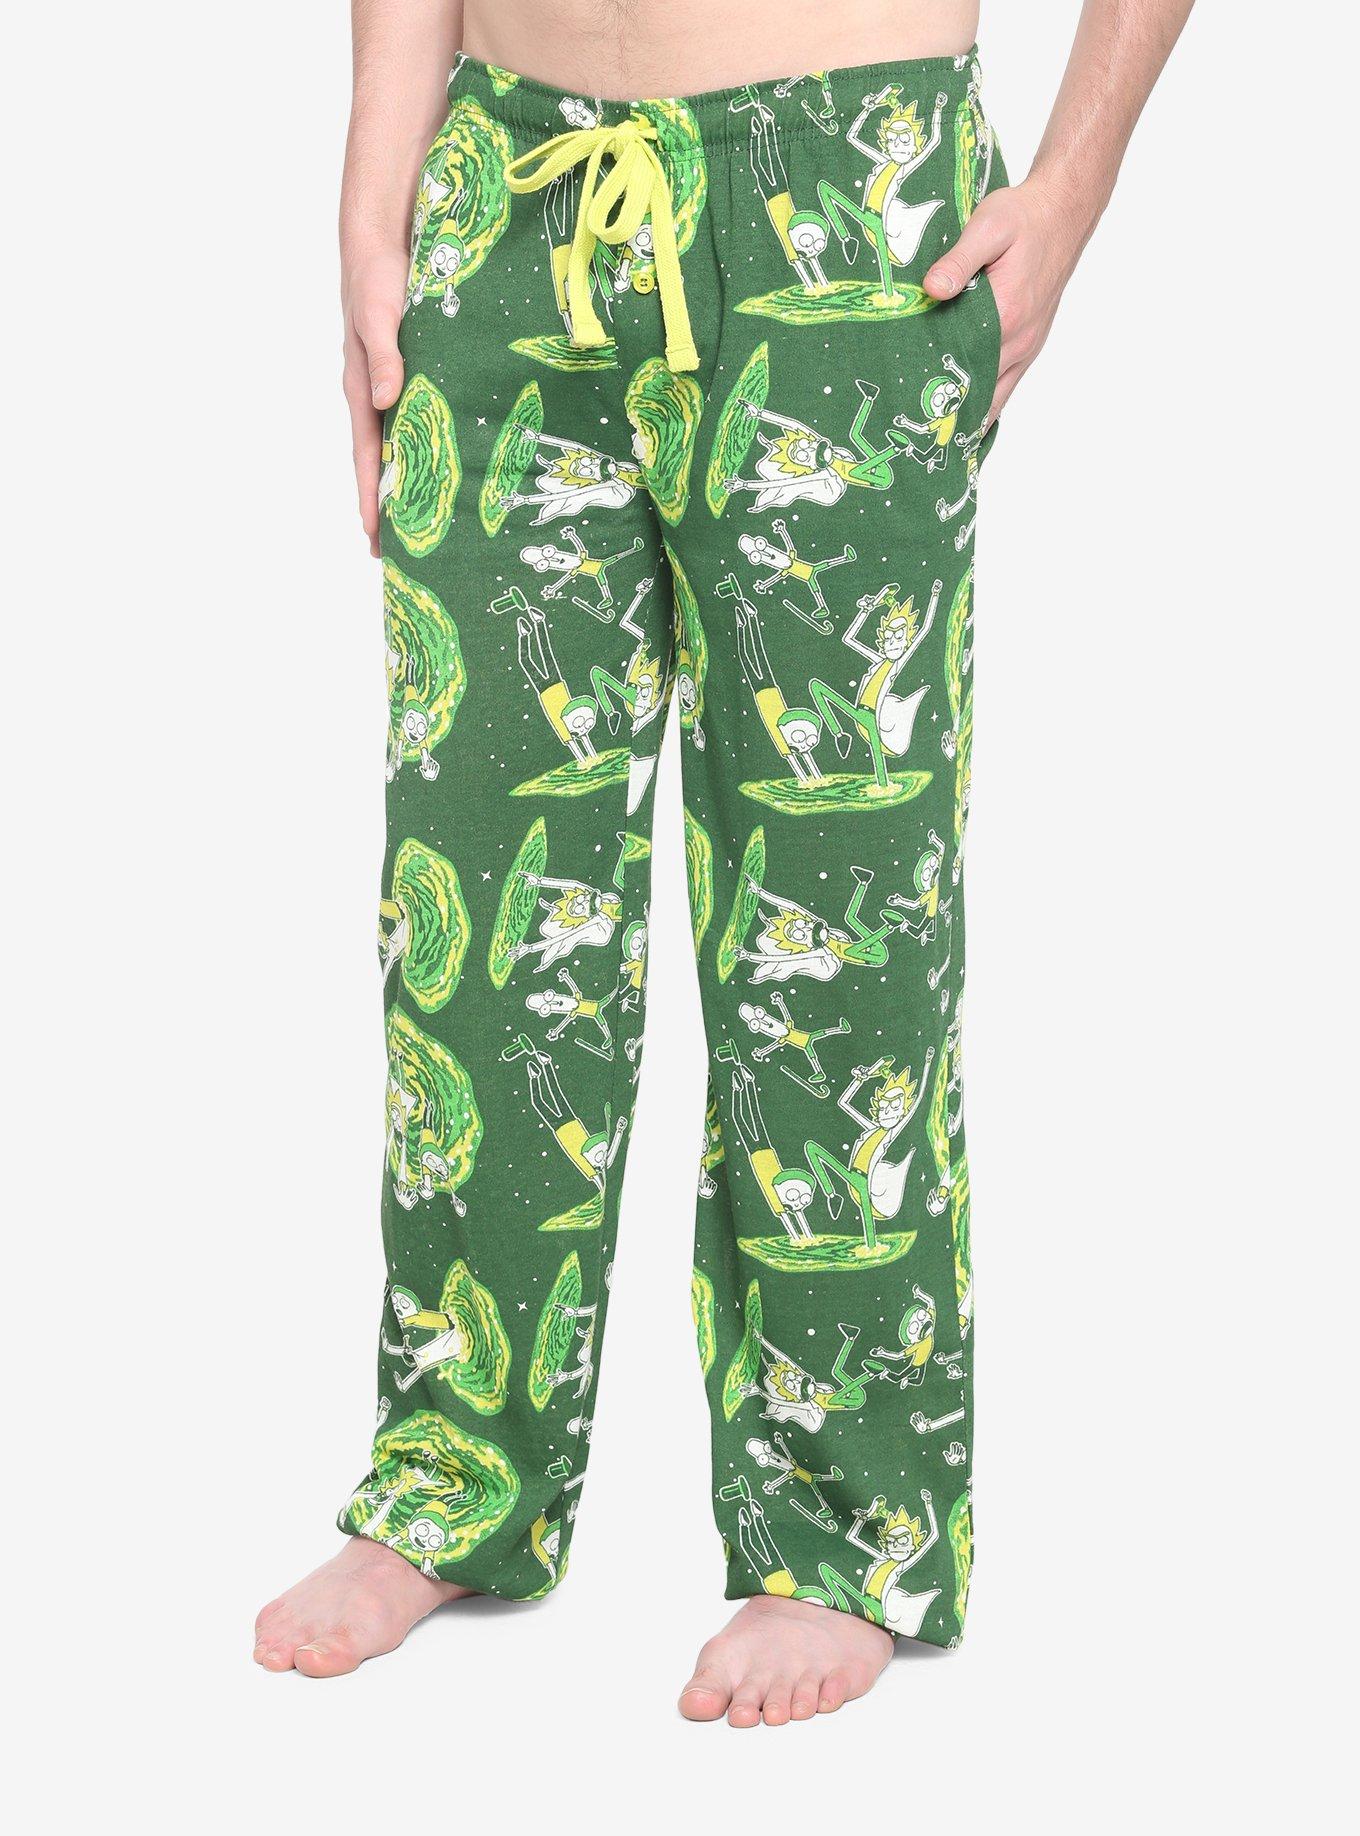 Rick And Morty Allover Print Pajama Pants | Hot Topic